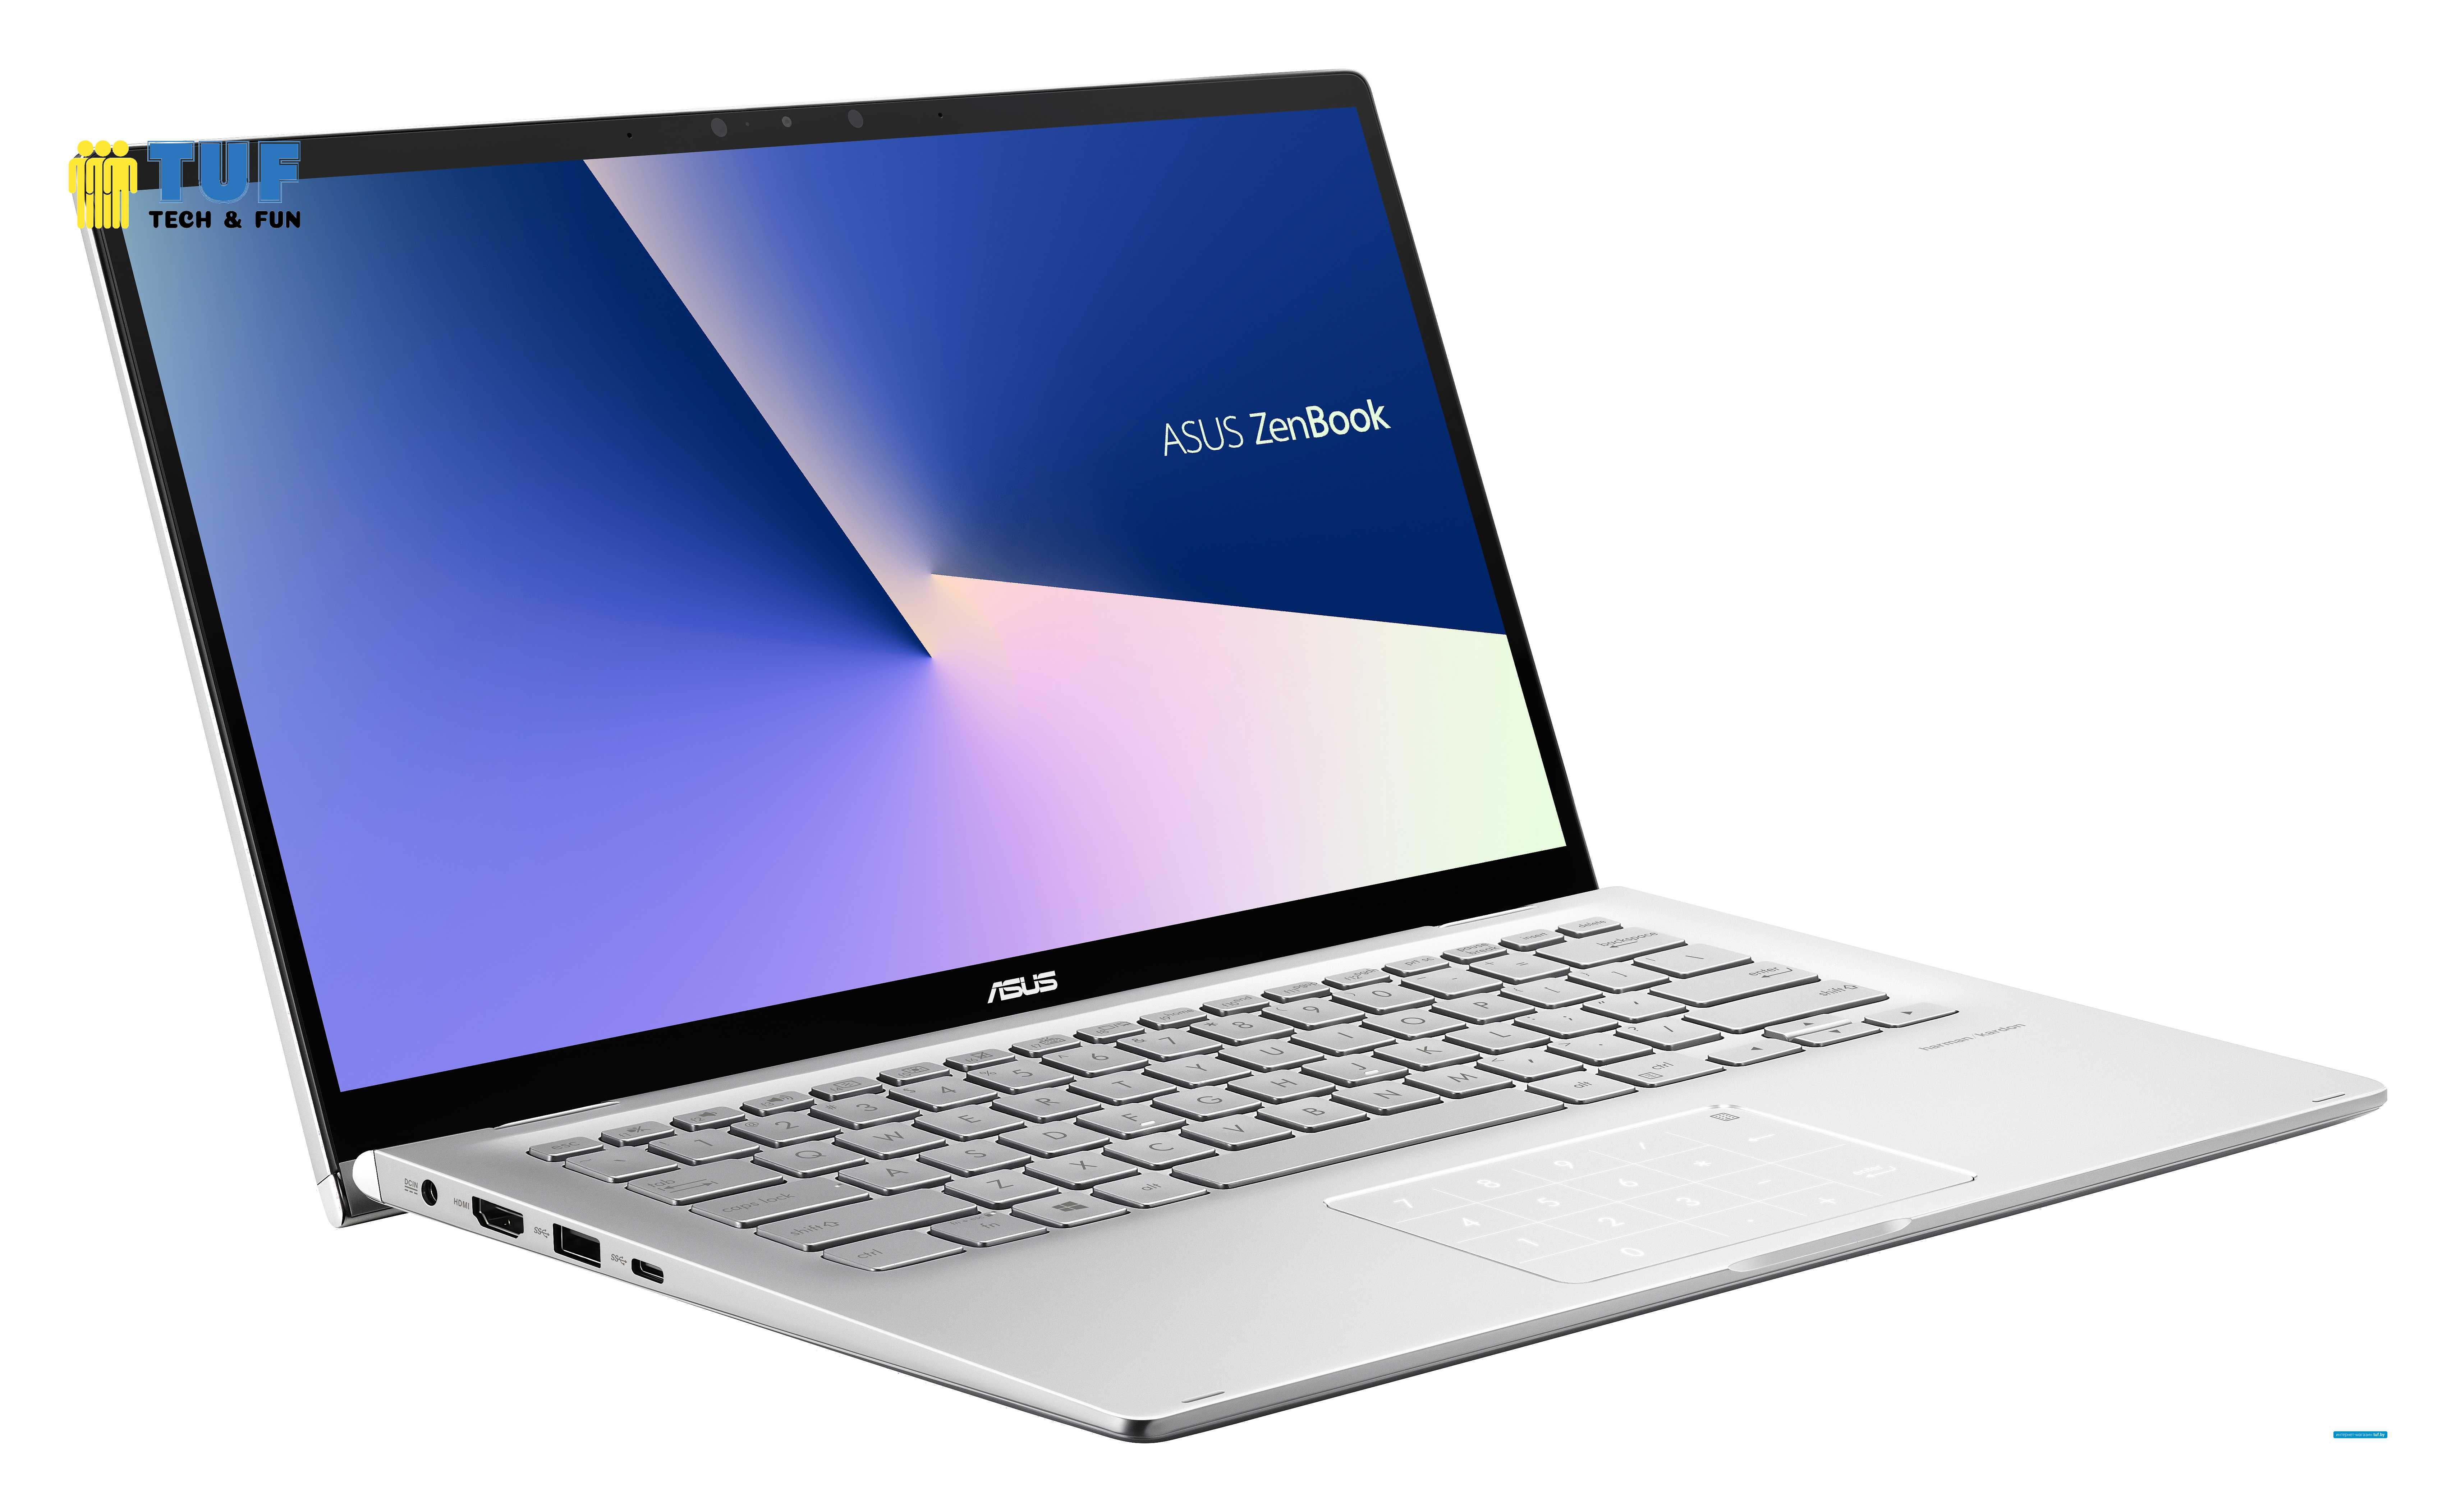 Ноутбук 2-в-1 ASUS Zenbook Flip 14 UM462DA-AI082T